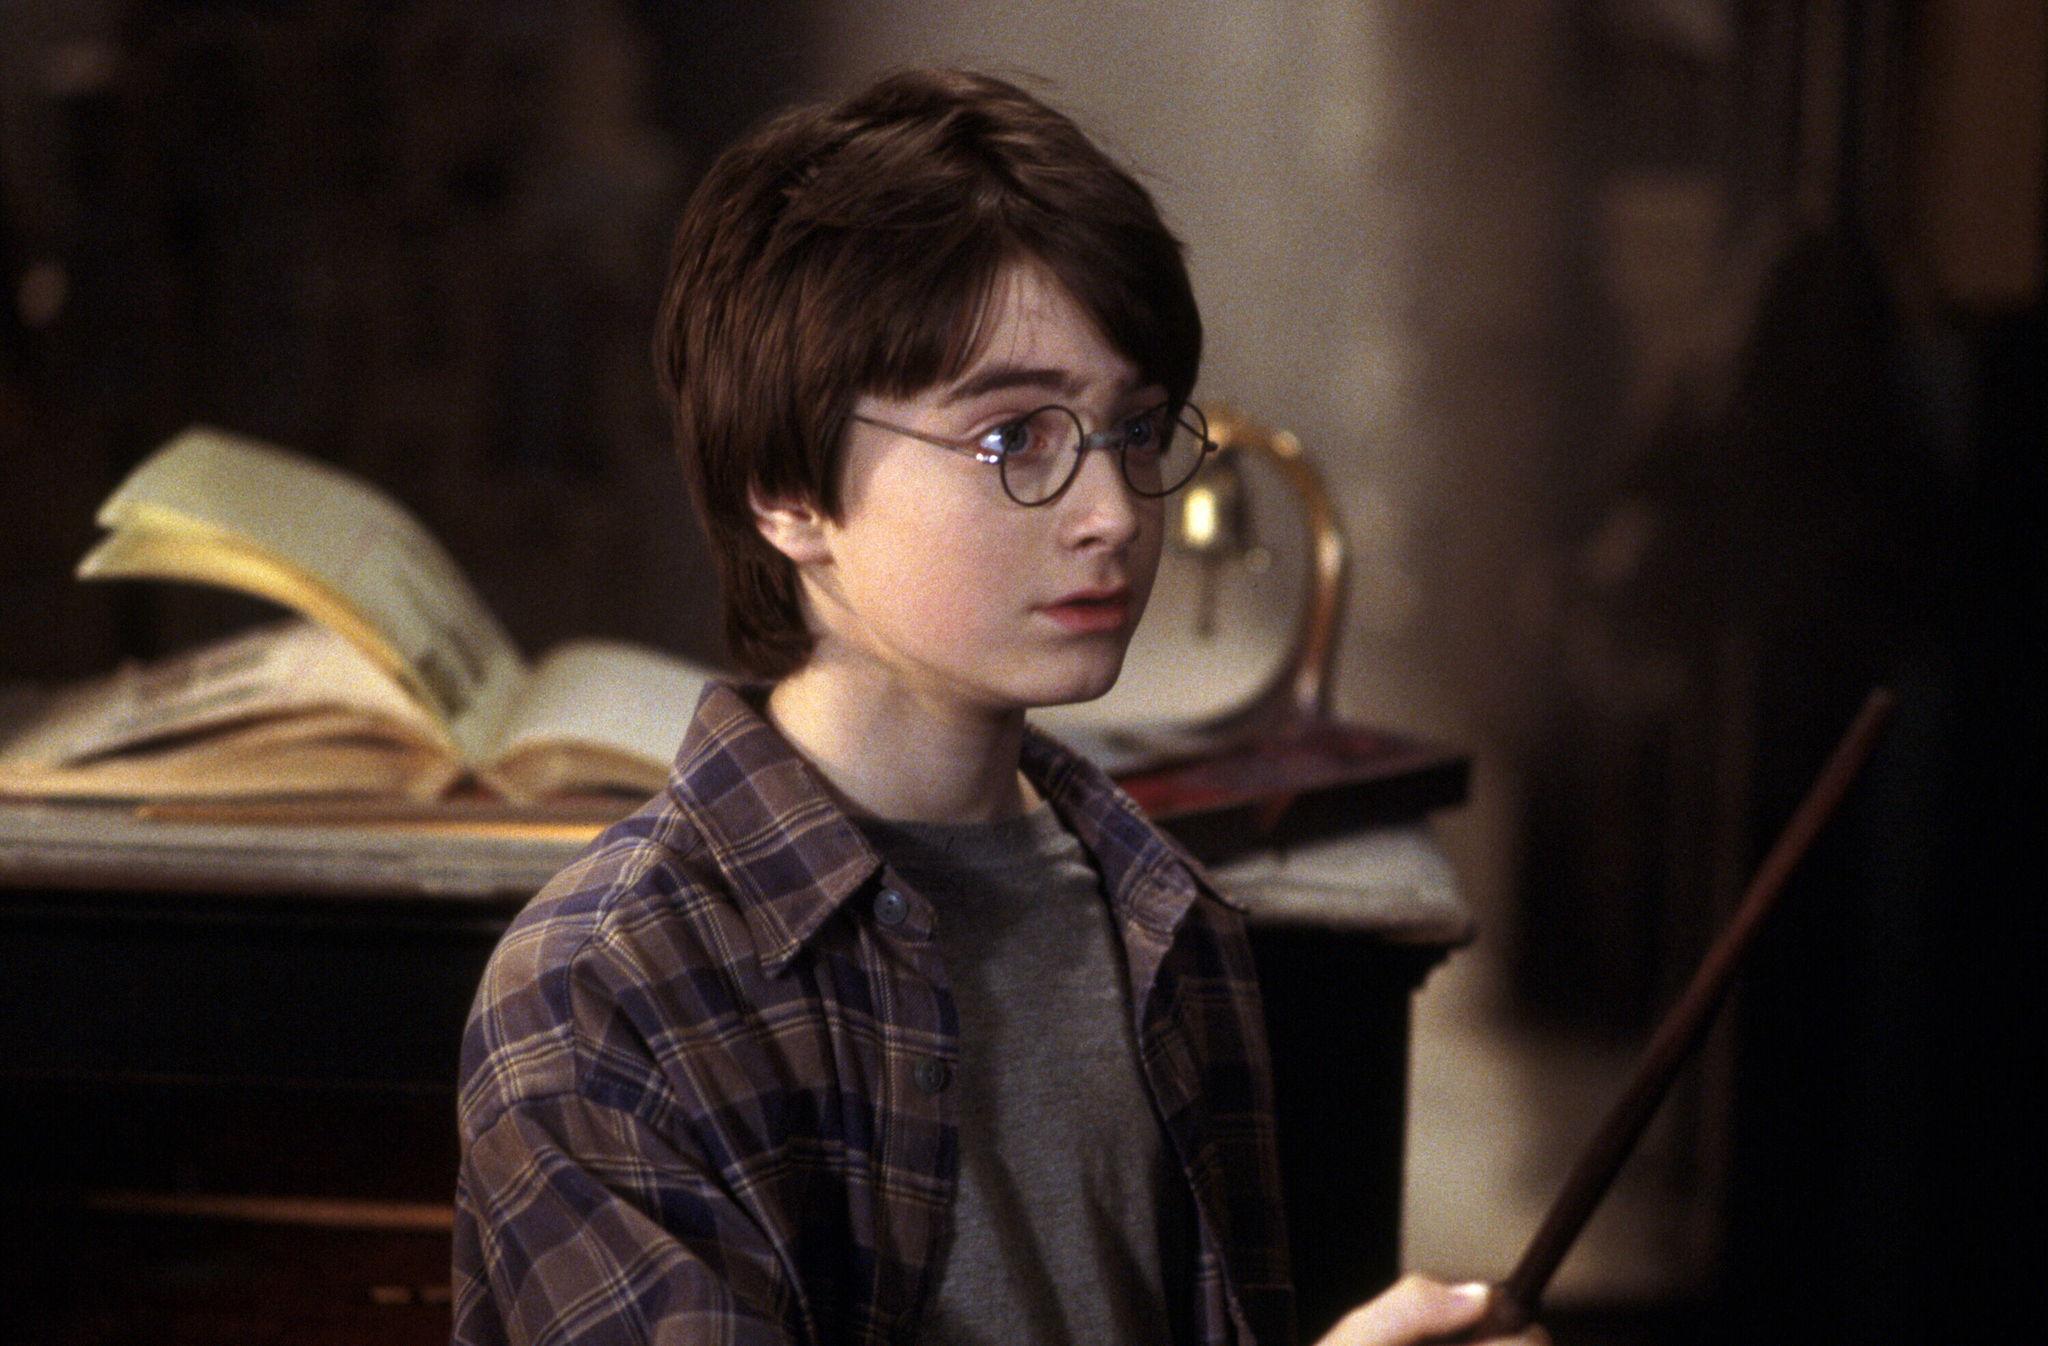 Harry Potter e a Pedra Filosofal (2001)